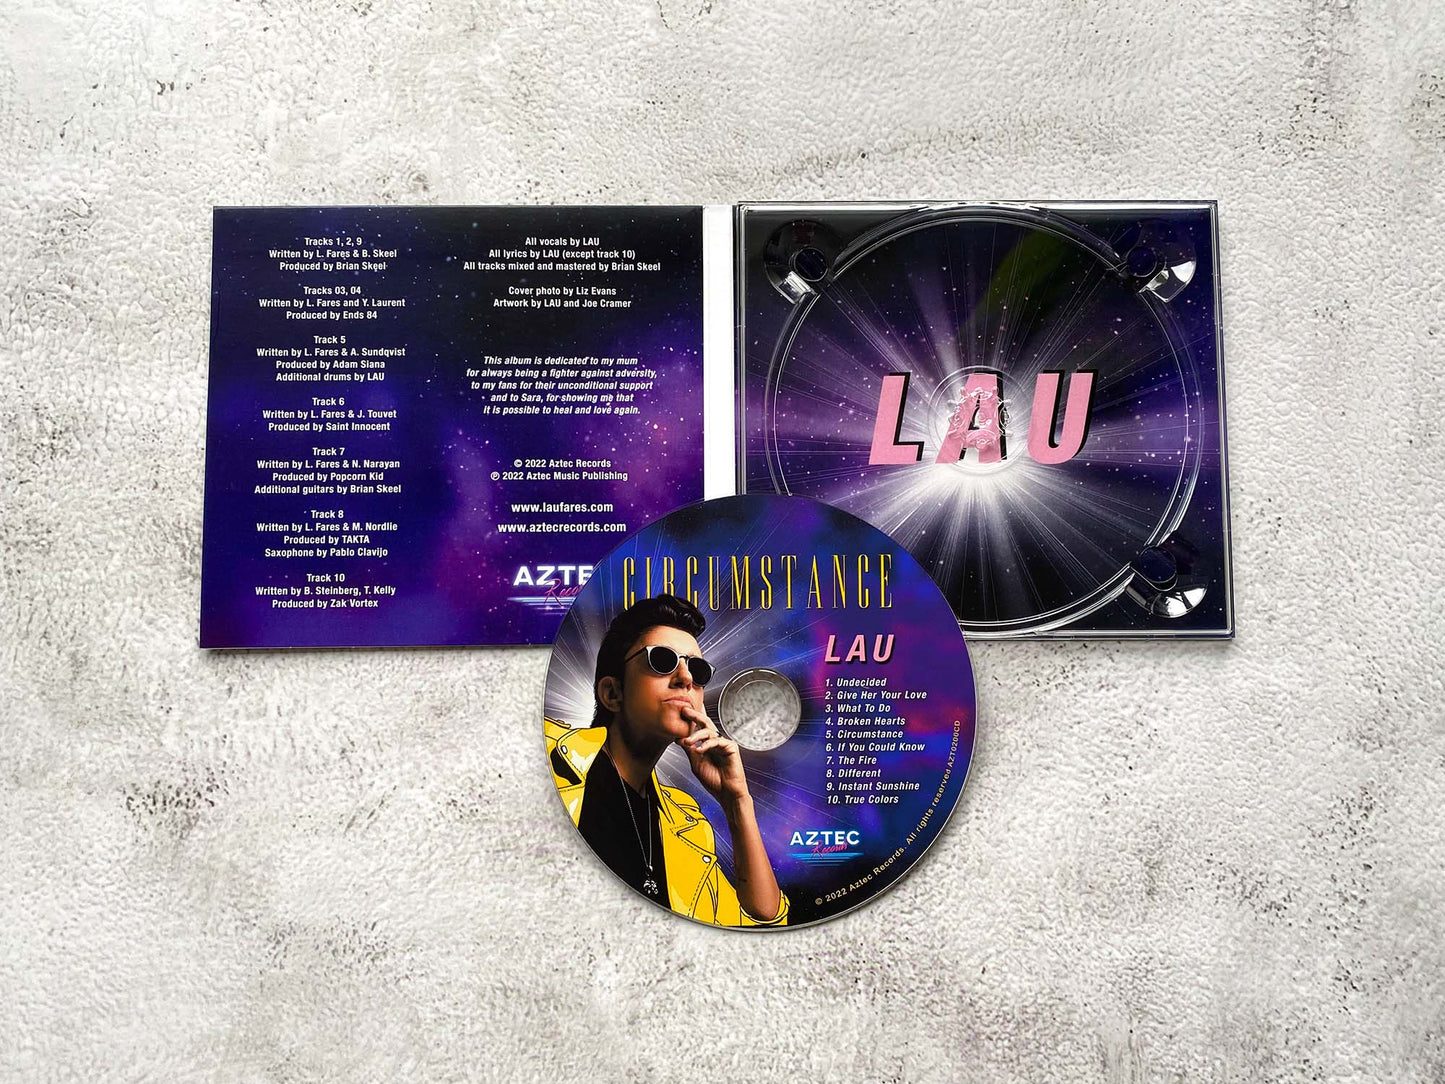 LAU - 3 CD-R Collection